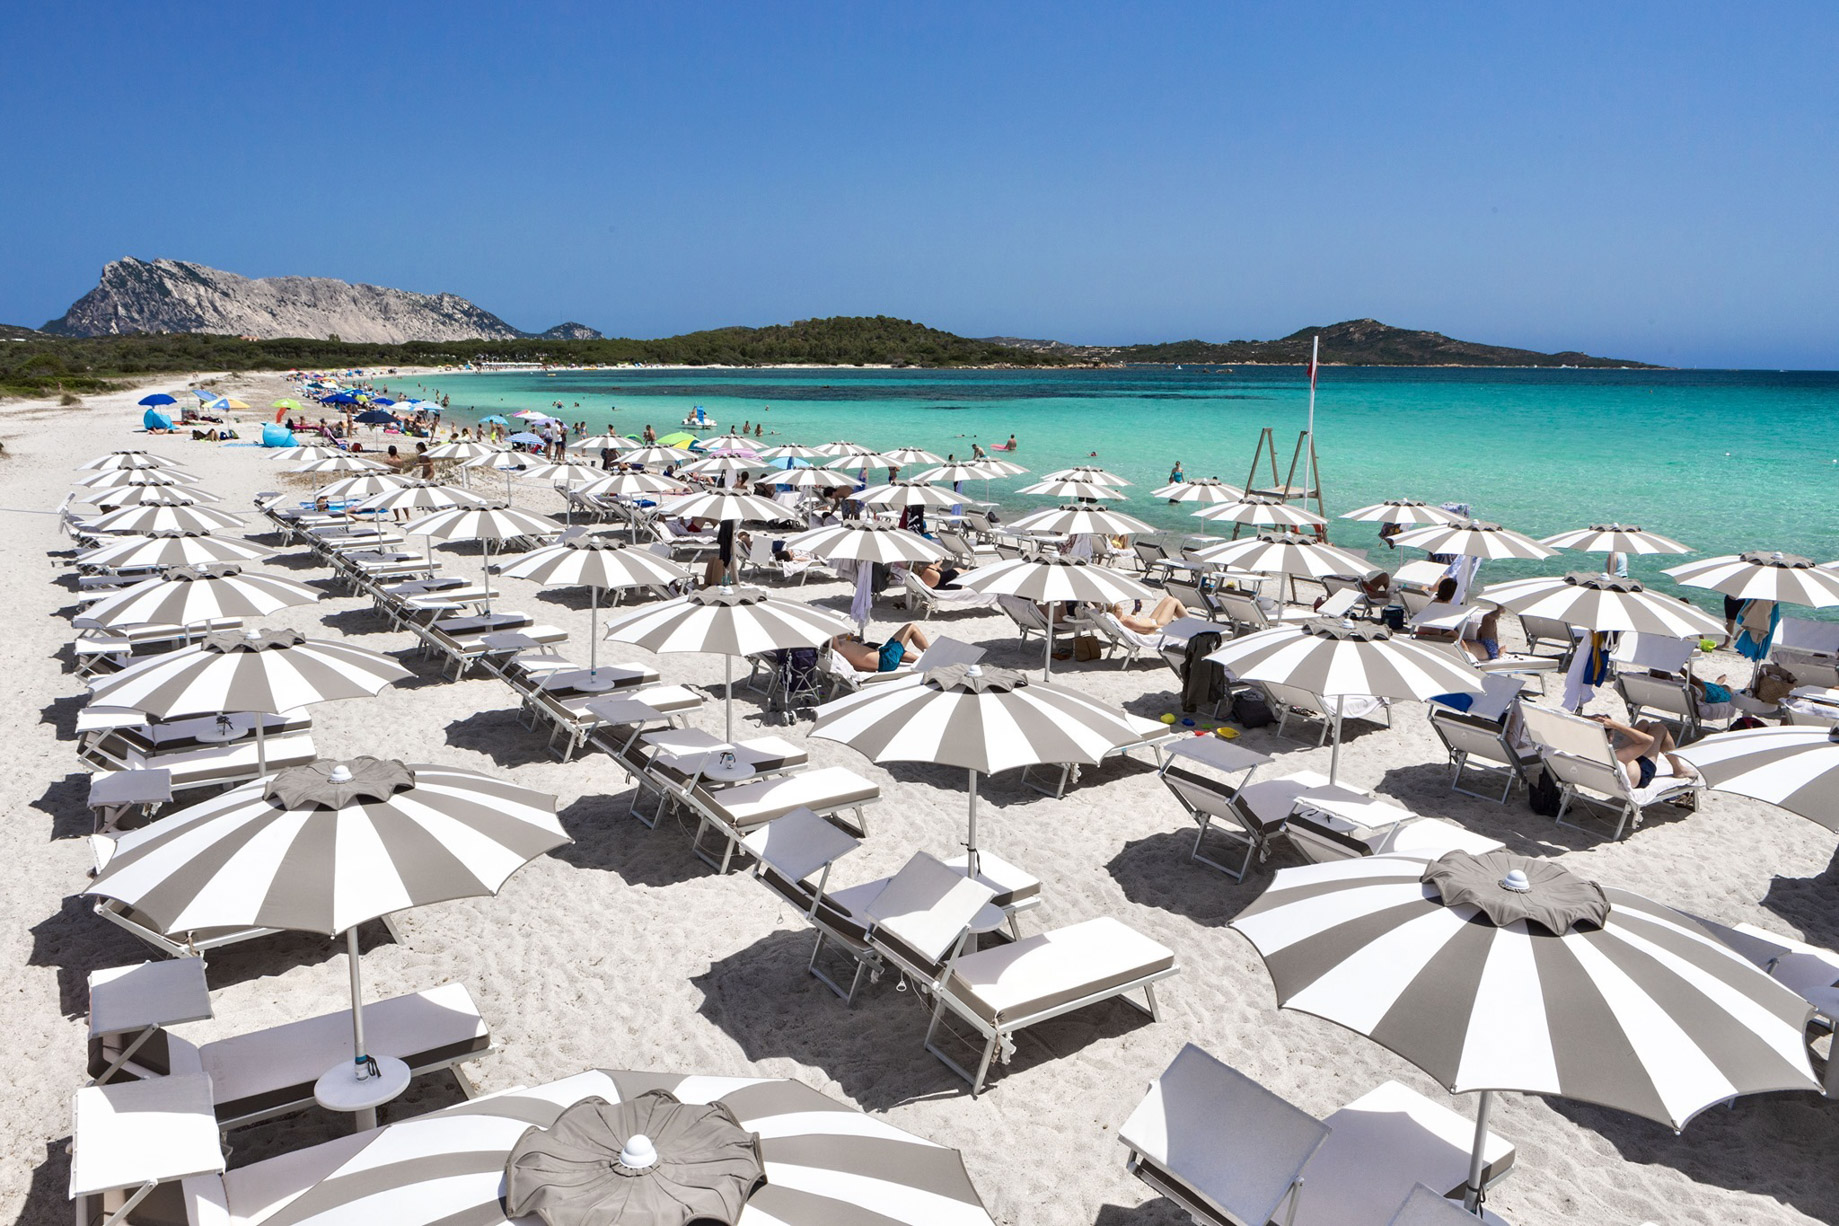 Baglioni Resort Sardinia – San Teodoro, Sardegna, Italy – Beach